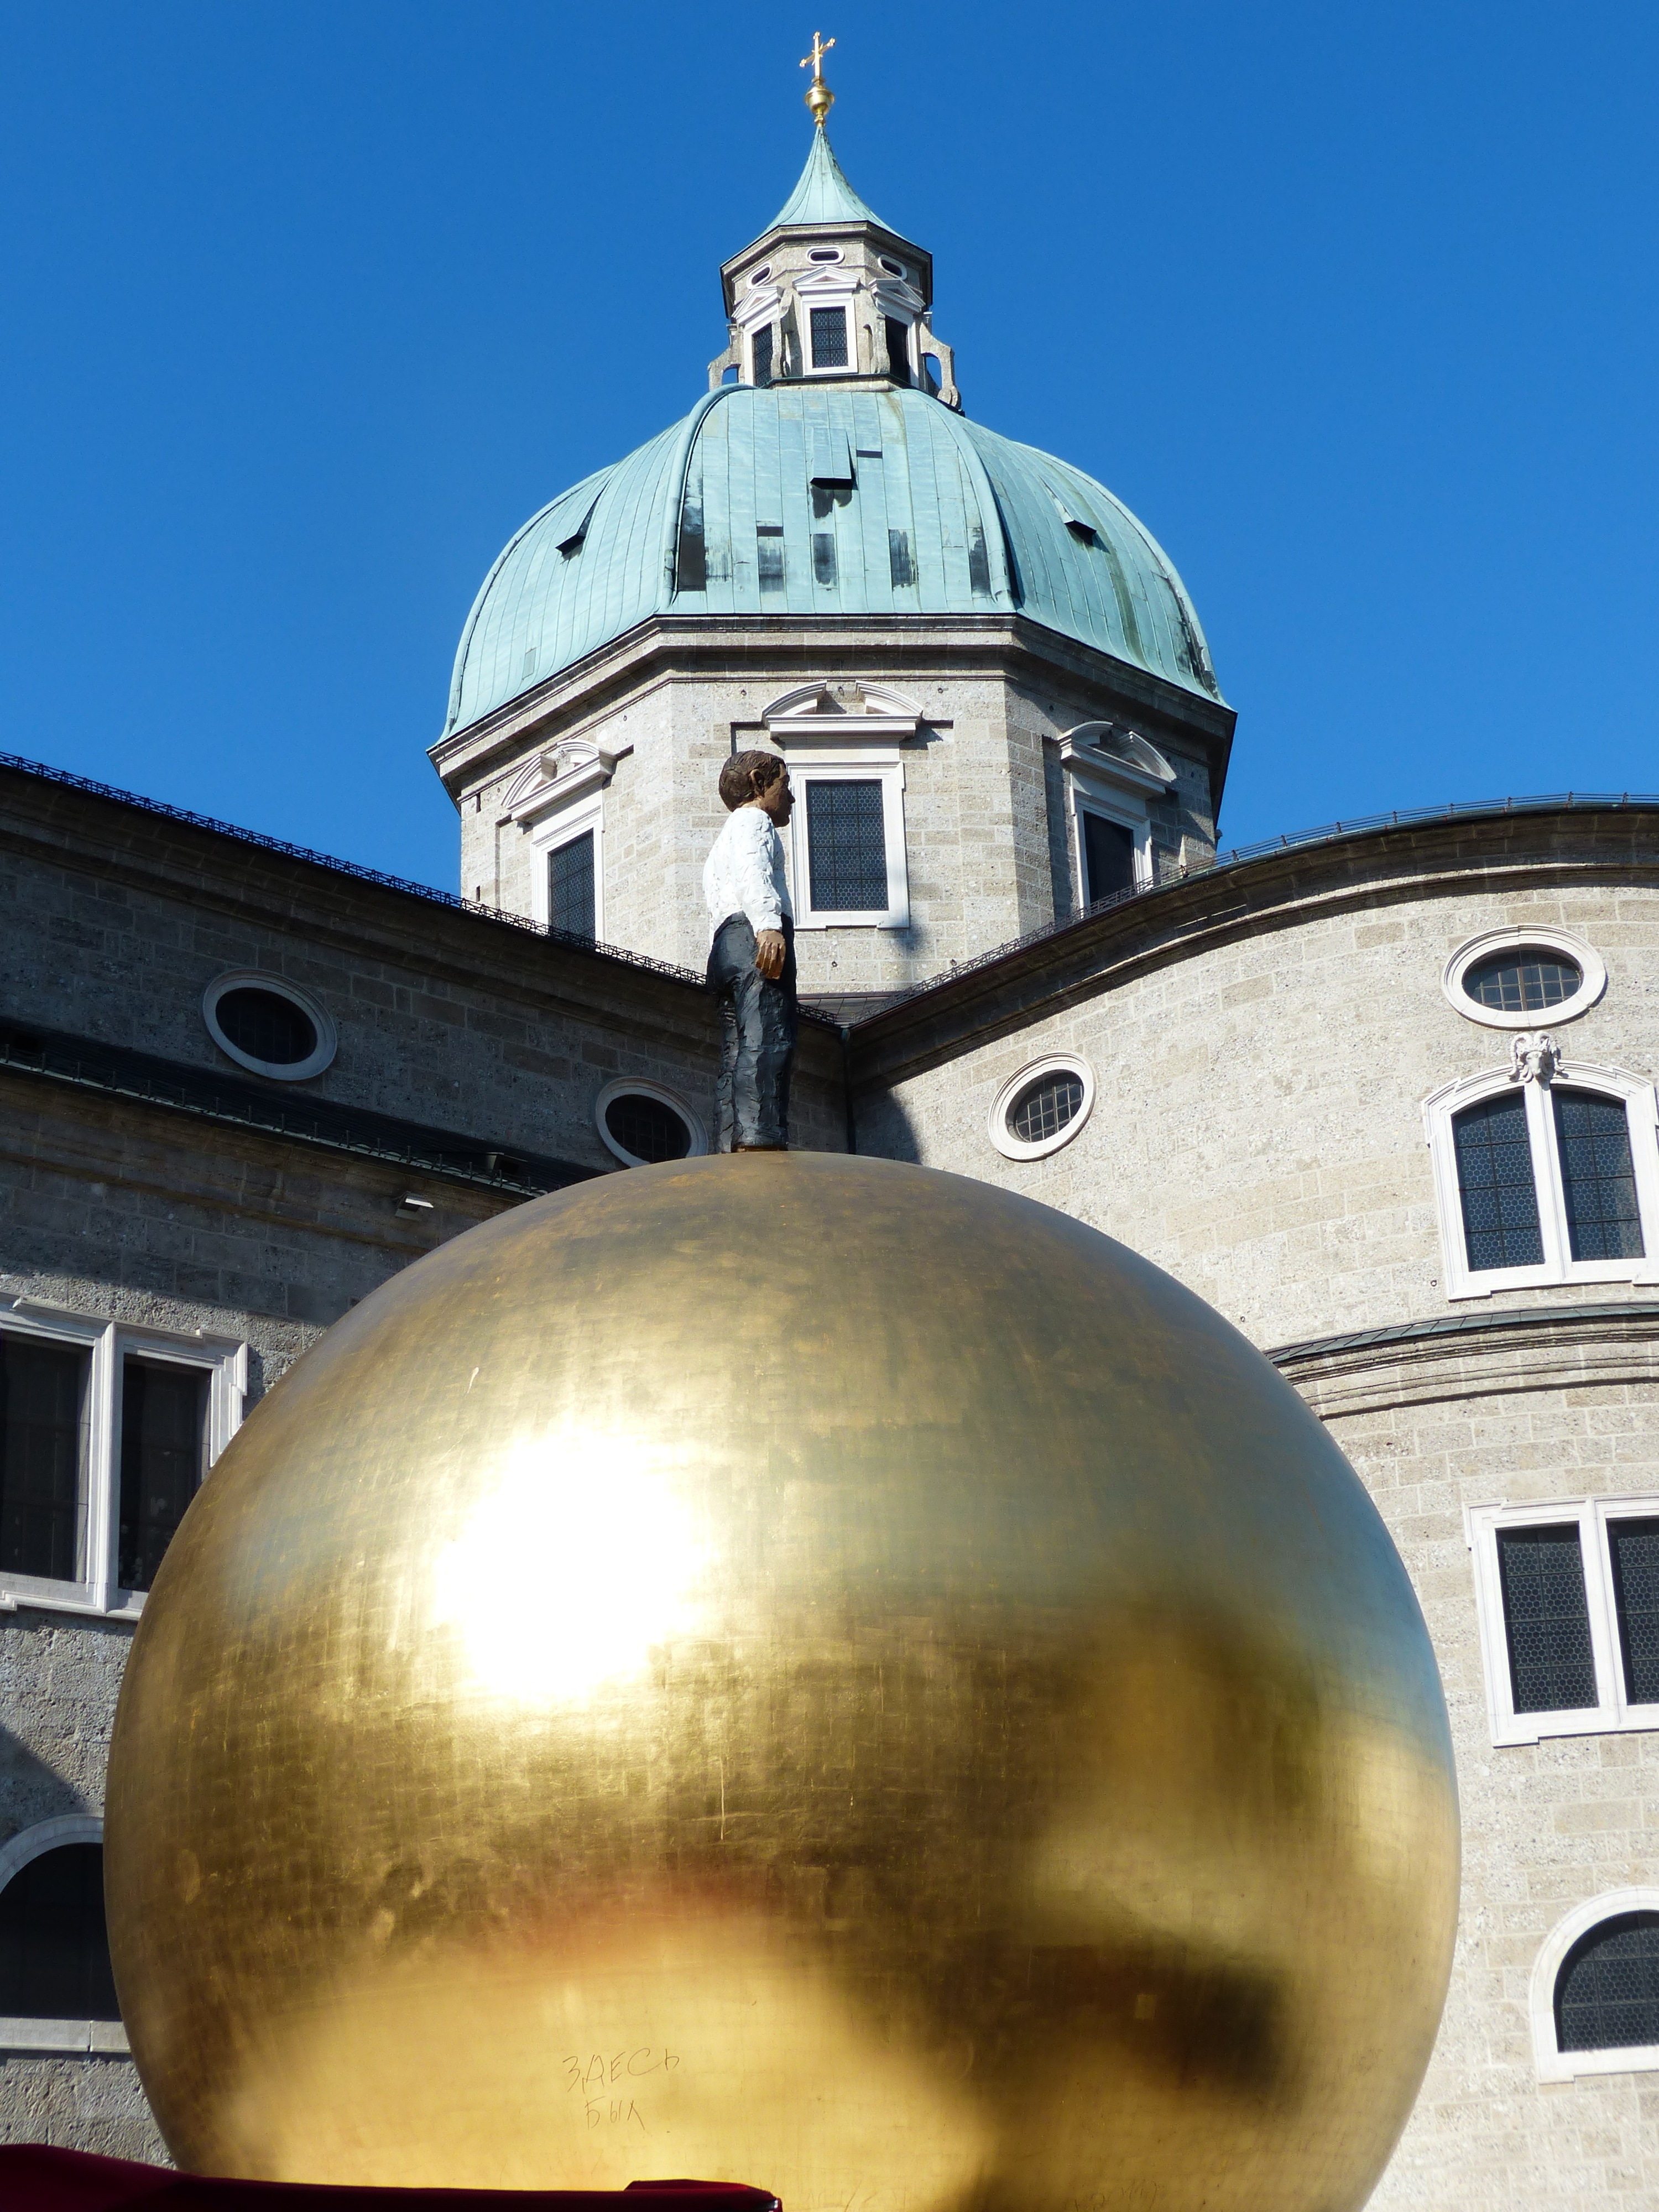 brass ball with human statue landmark